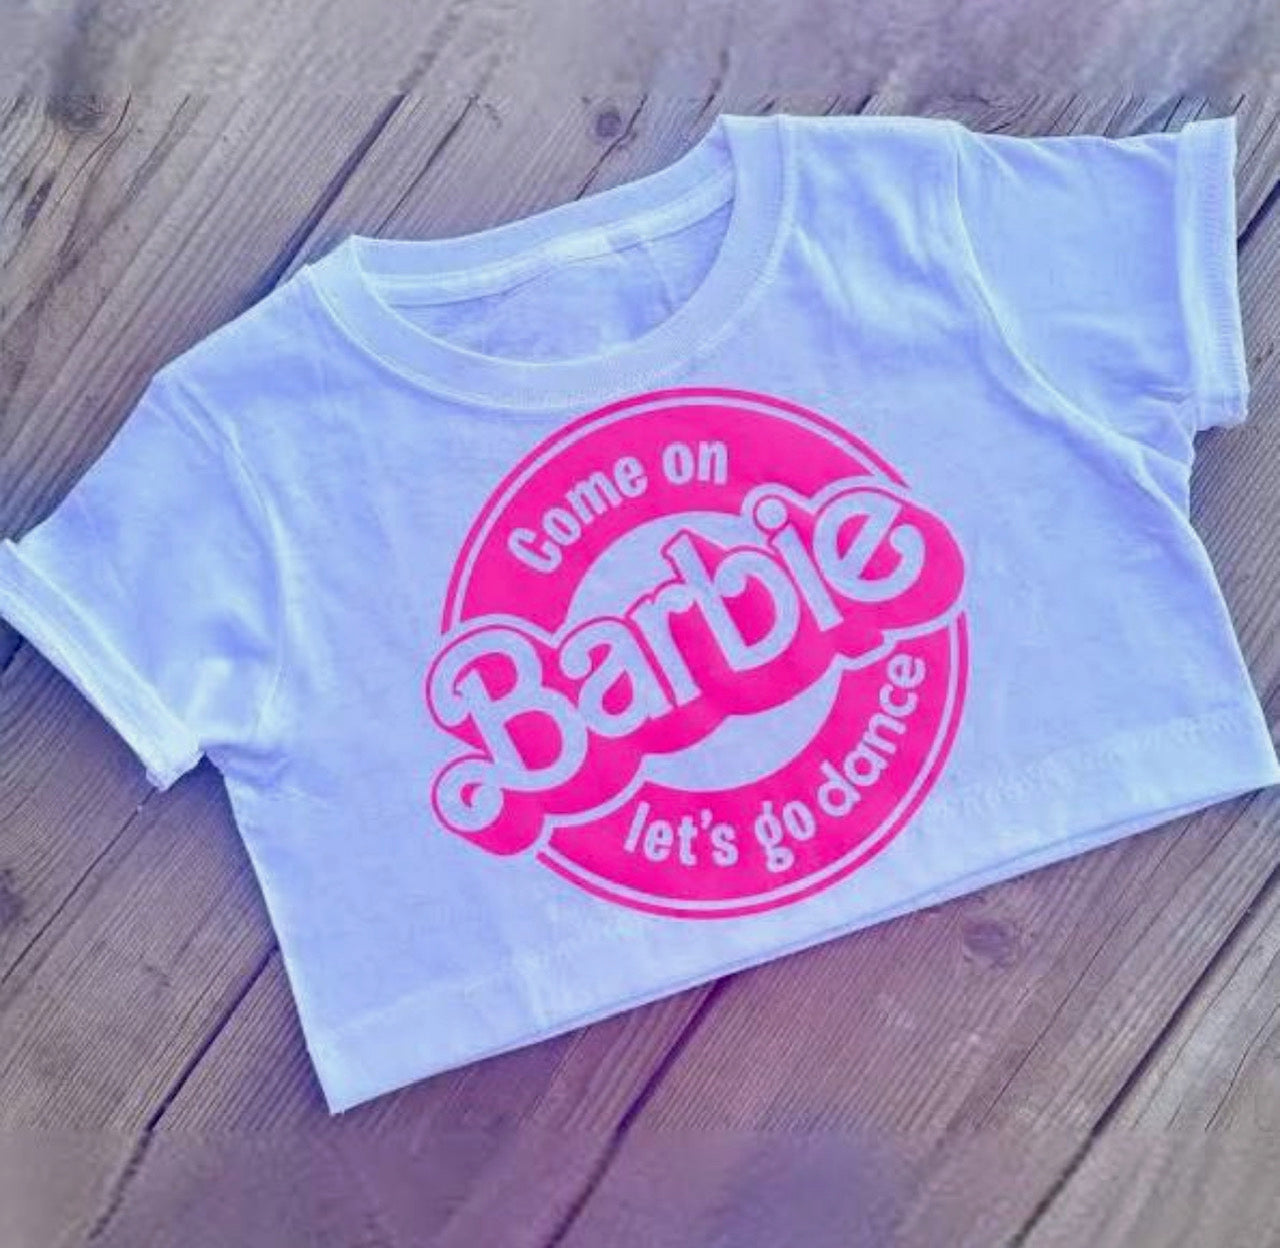 Come on barbie lets go dance CROP top| Dance Barbie tee| Dance crop top| Dancer tee| Barbie movie| Barbie shirt| Barbie shirt| Barbie tee| Barbie Girl shirt